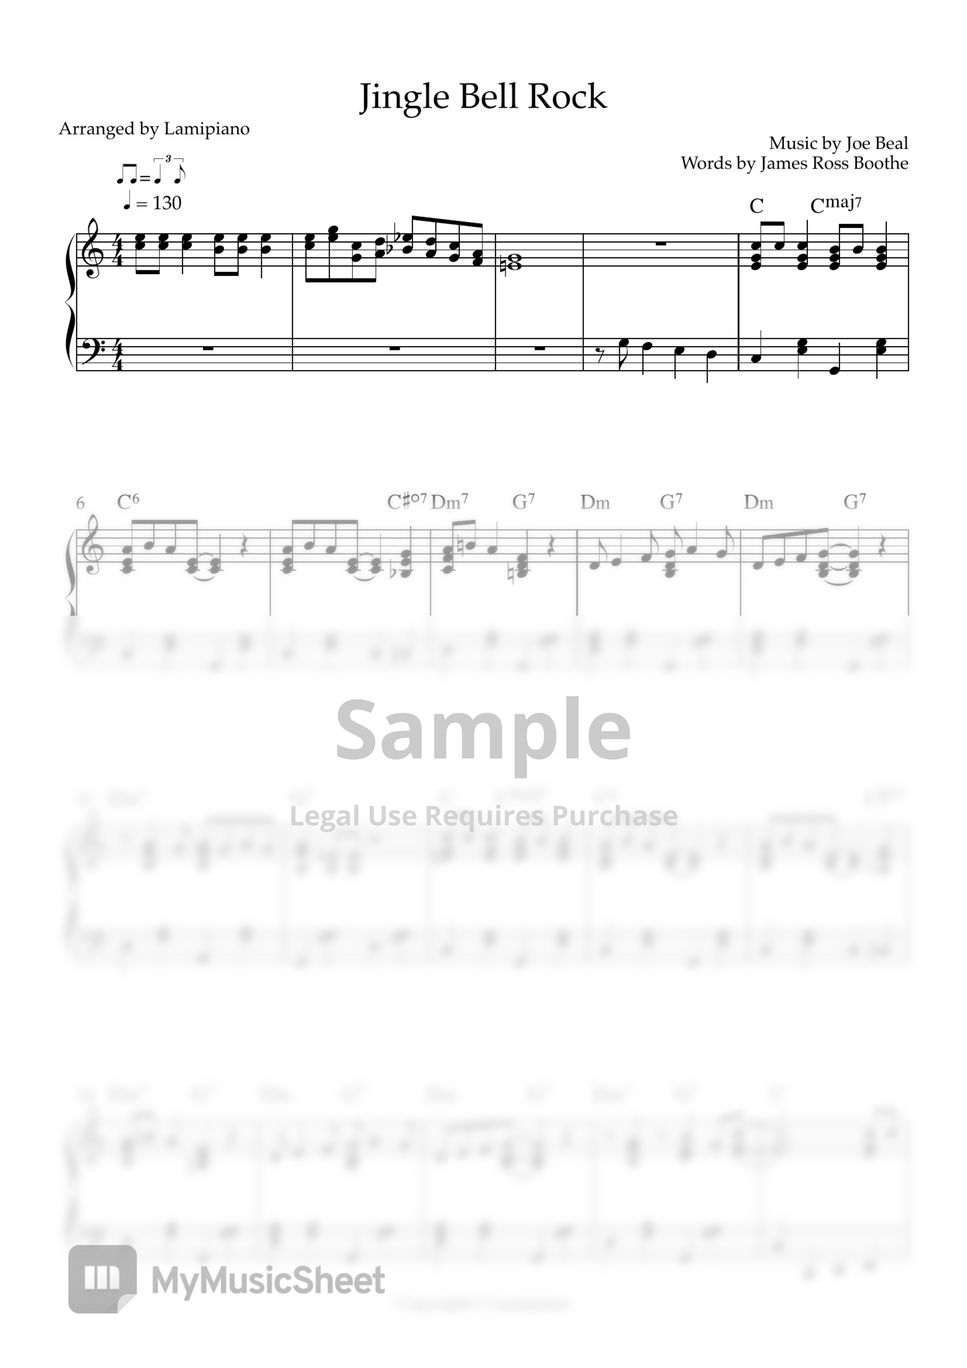 Bobby Helms - 징글벨락 (Jingle Bell Rock) (캐롤/재즈/스트라이드/스윙) by 라미피아노